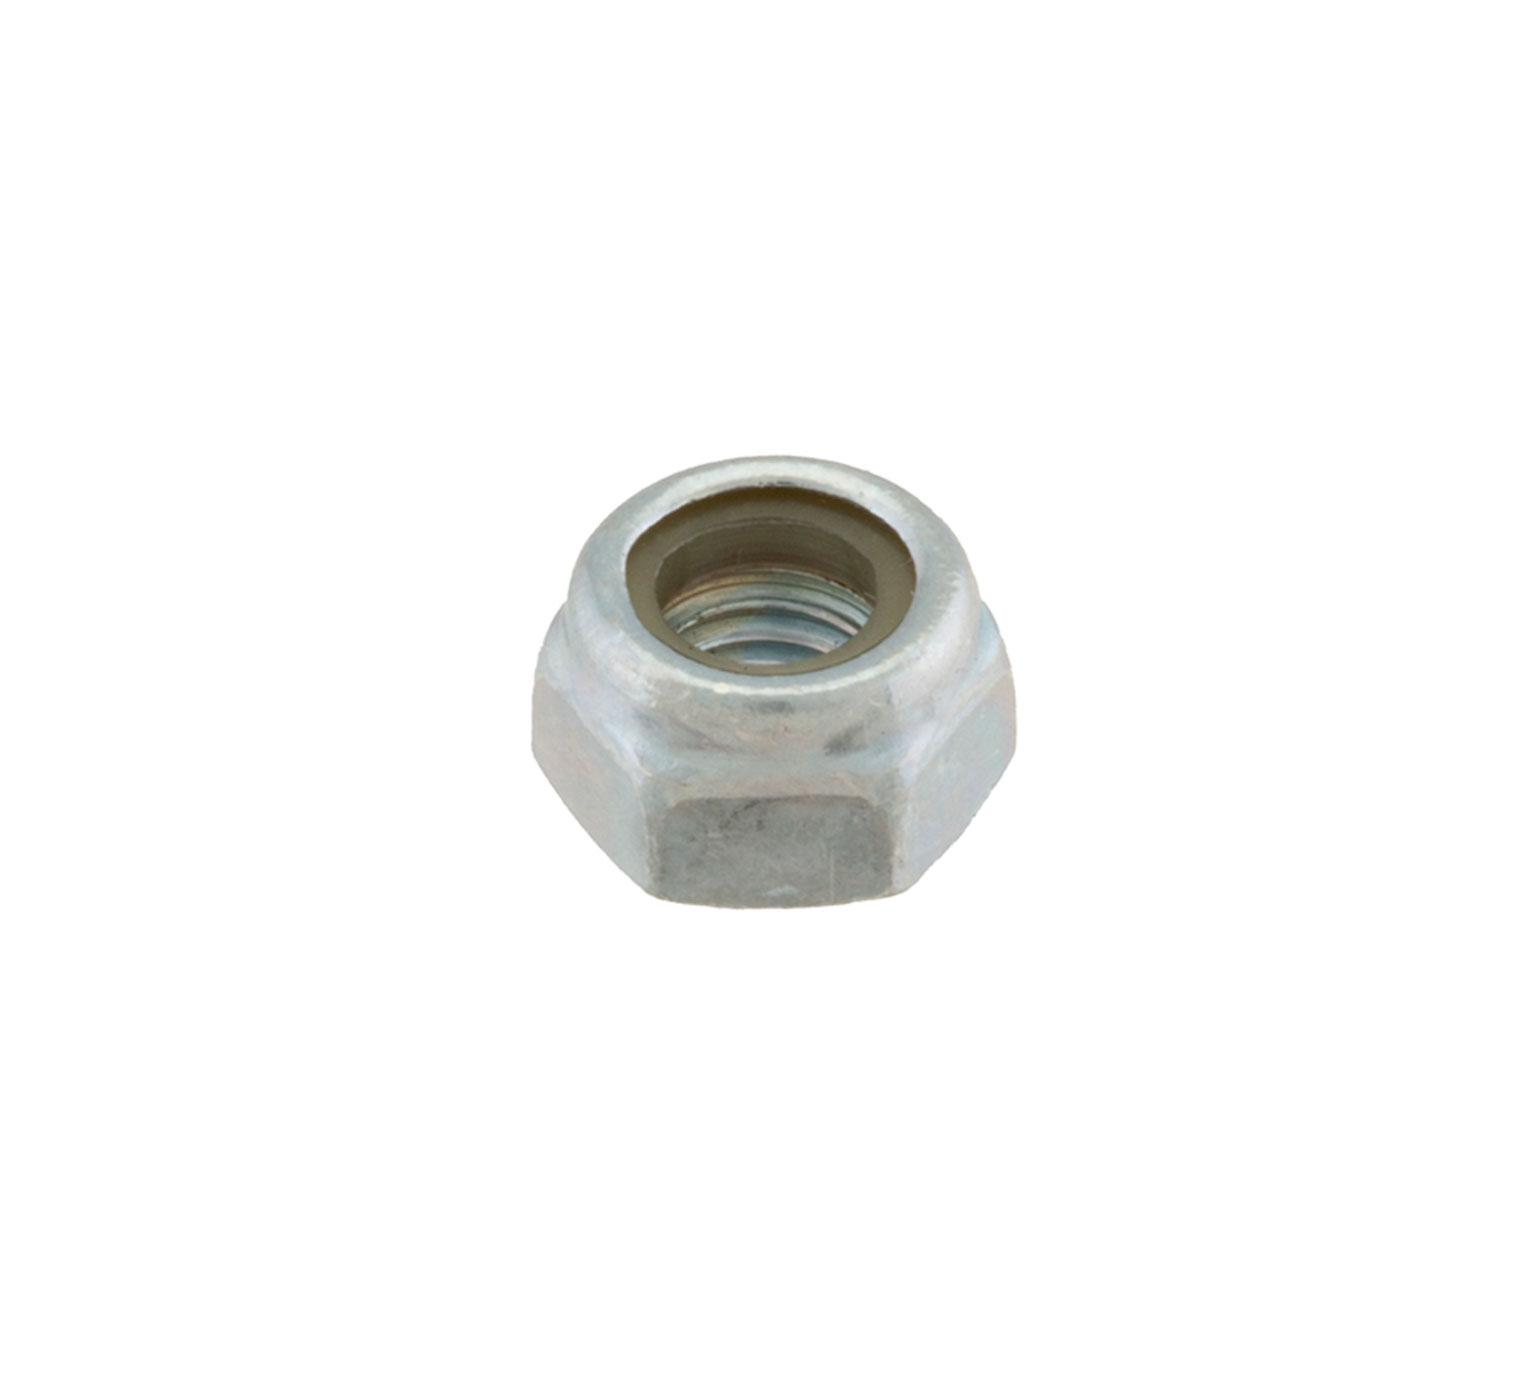 06549 Steel Hex Lock Nut - M5 Thread x 0.2 in alt 1